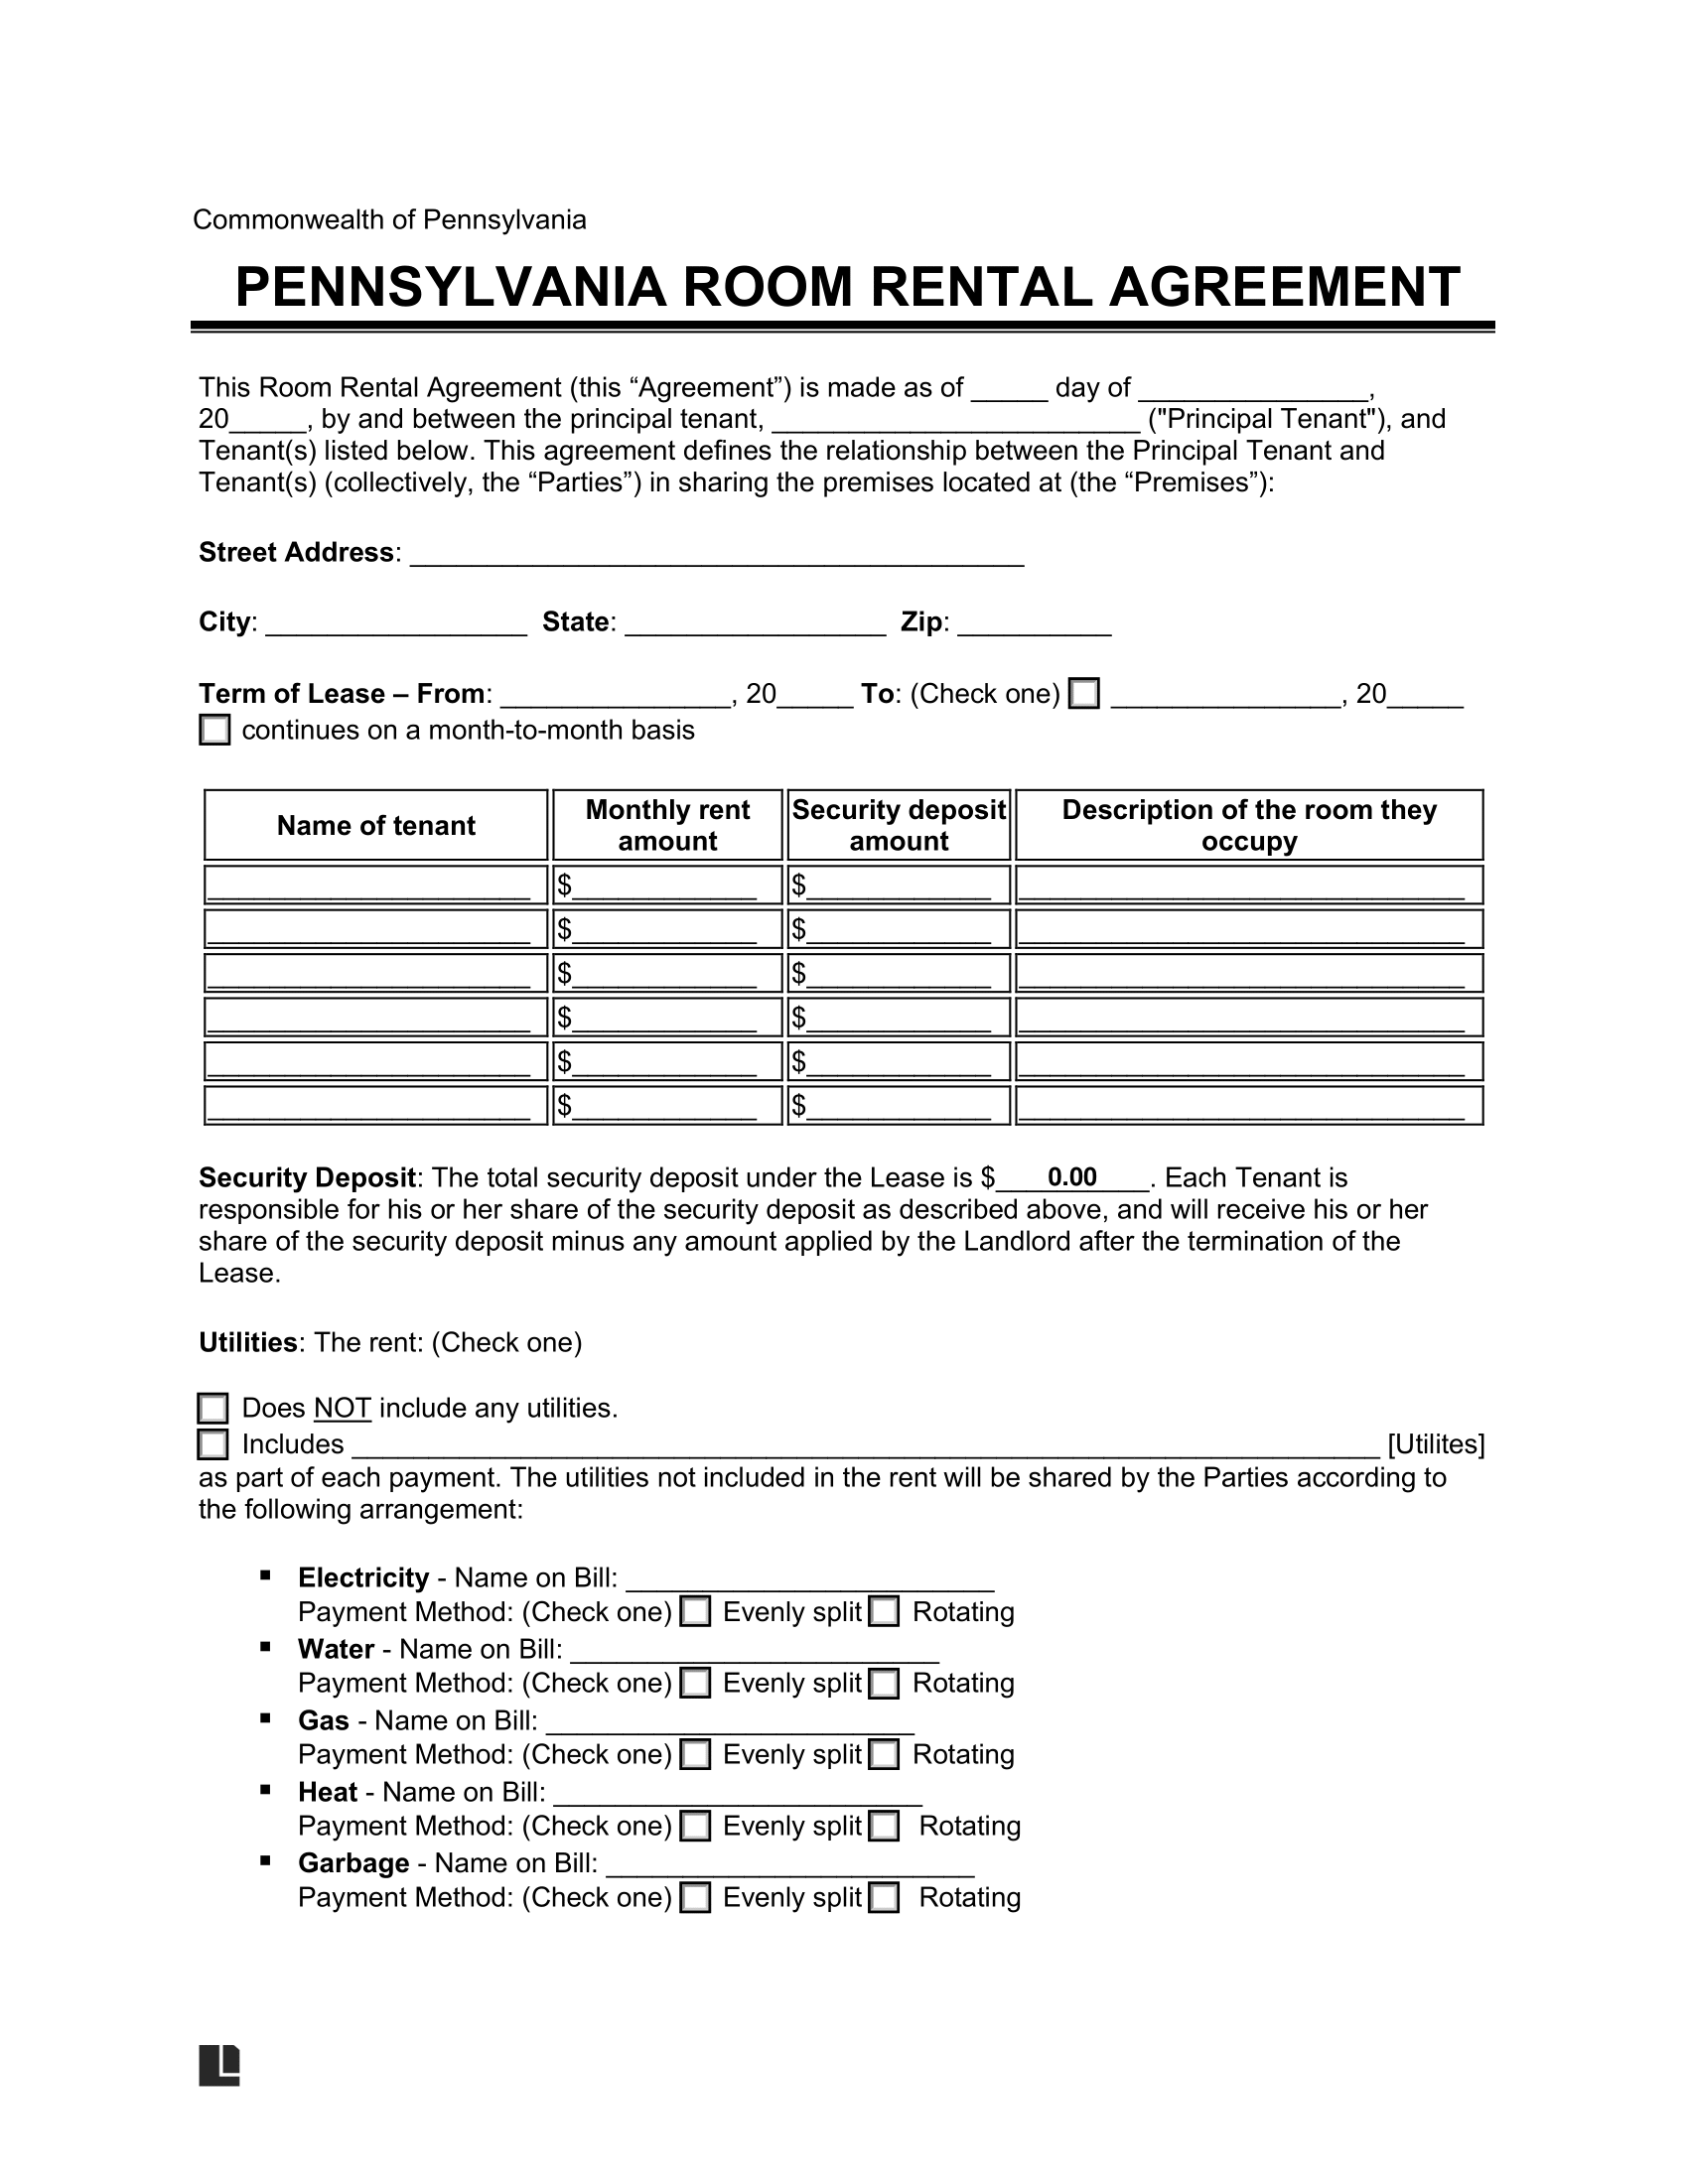 Pennsylvania Room Rental Agreement